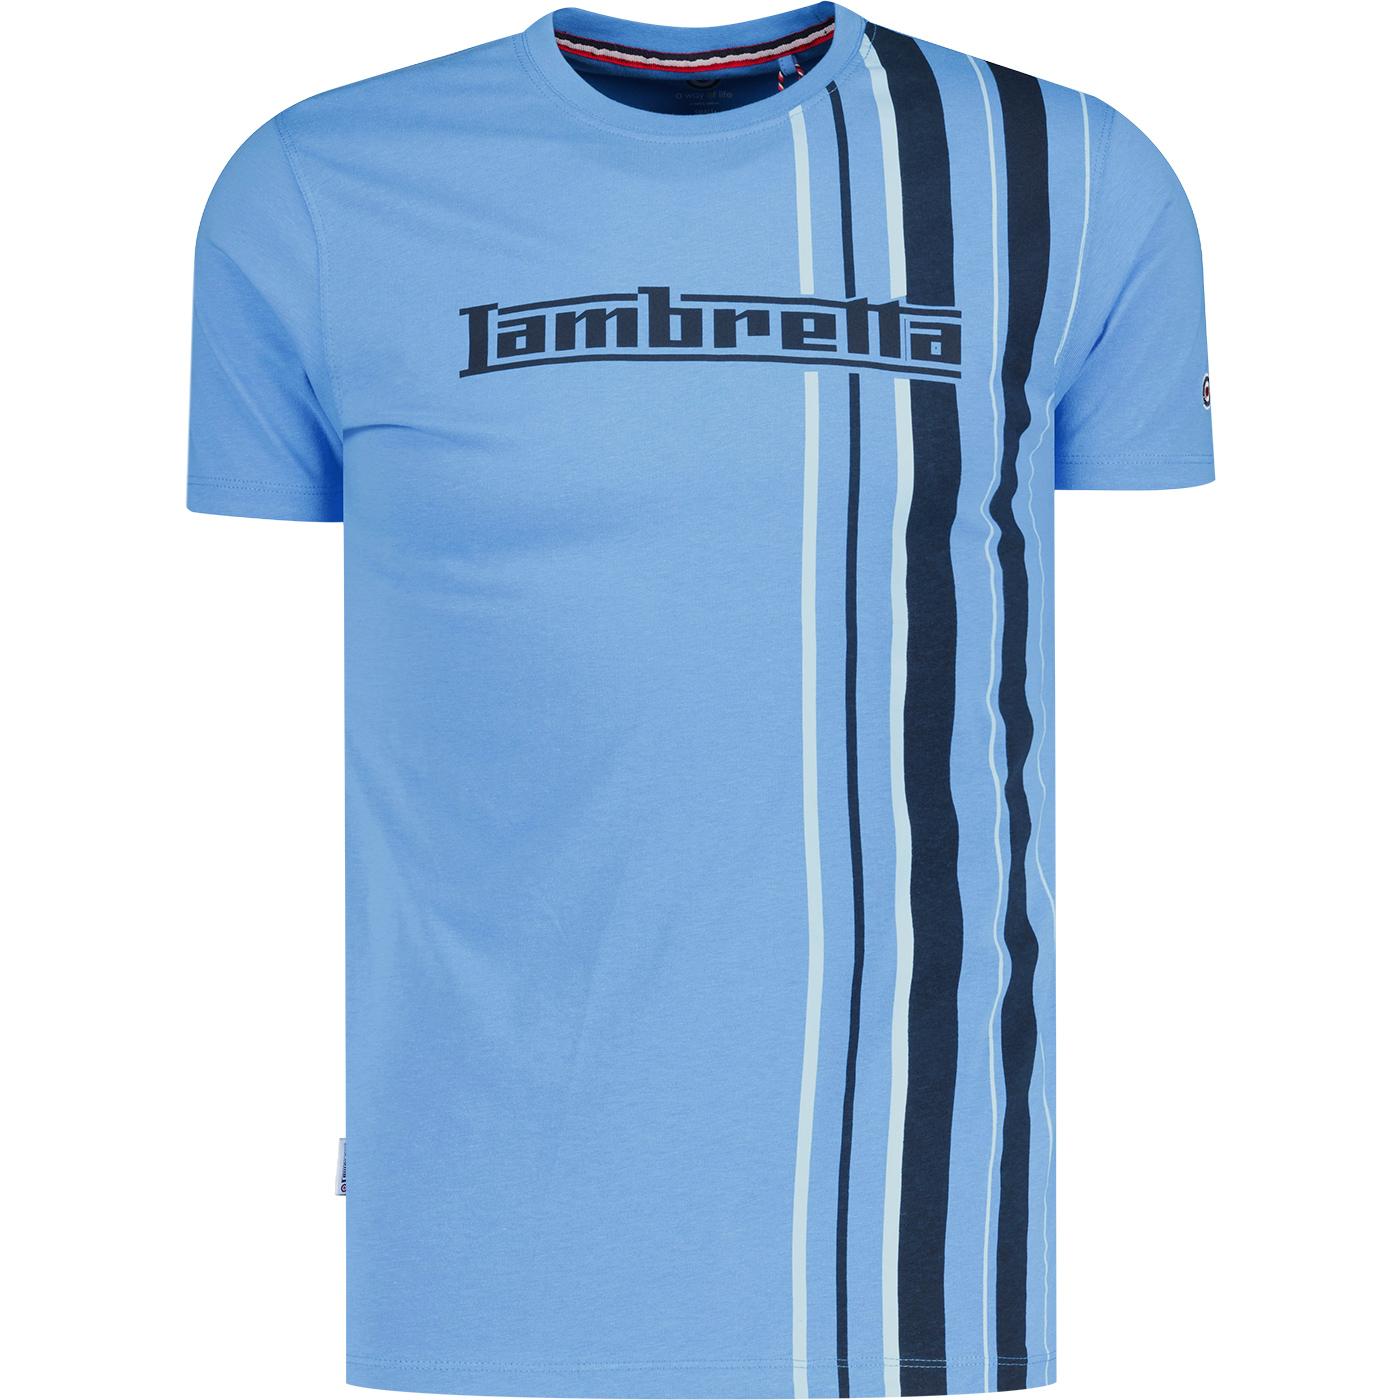 Lambretta Retro Racing Stripe Mod Crew T-shirt A/B